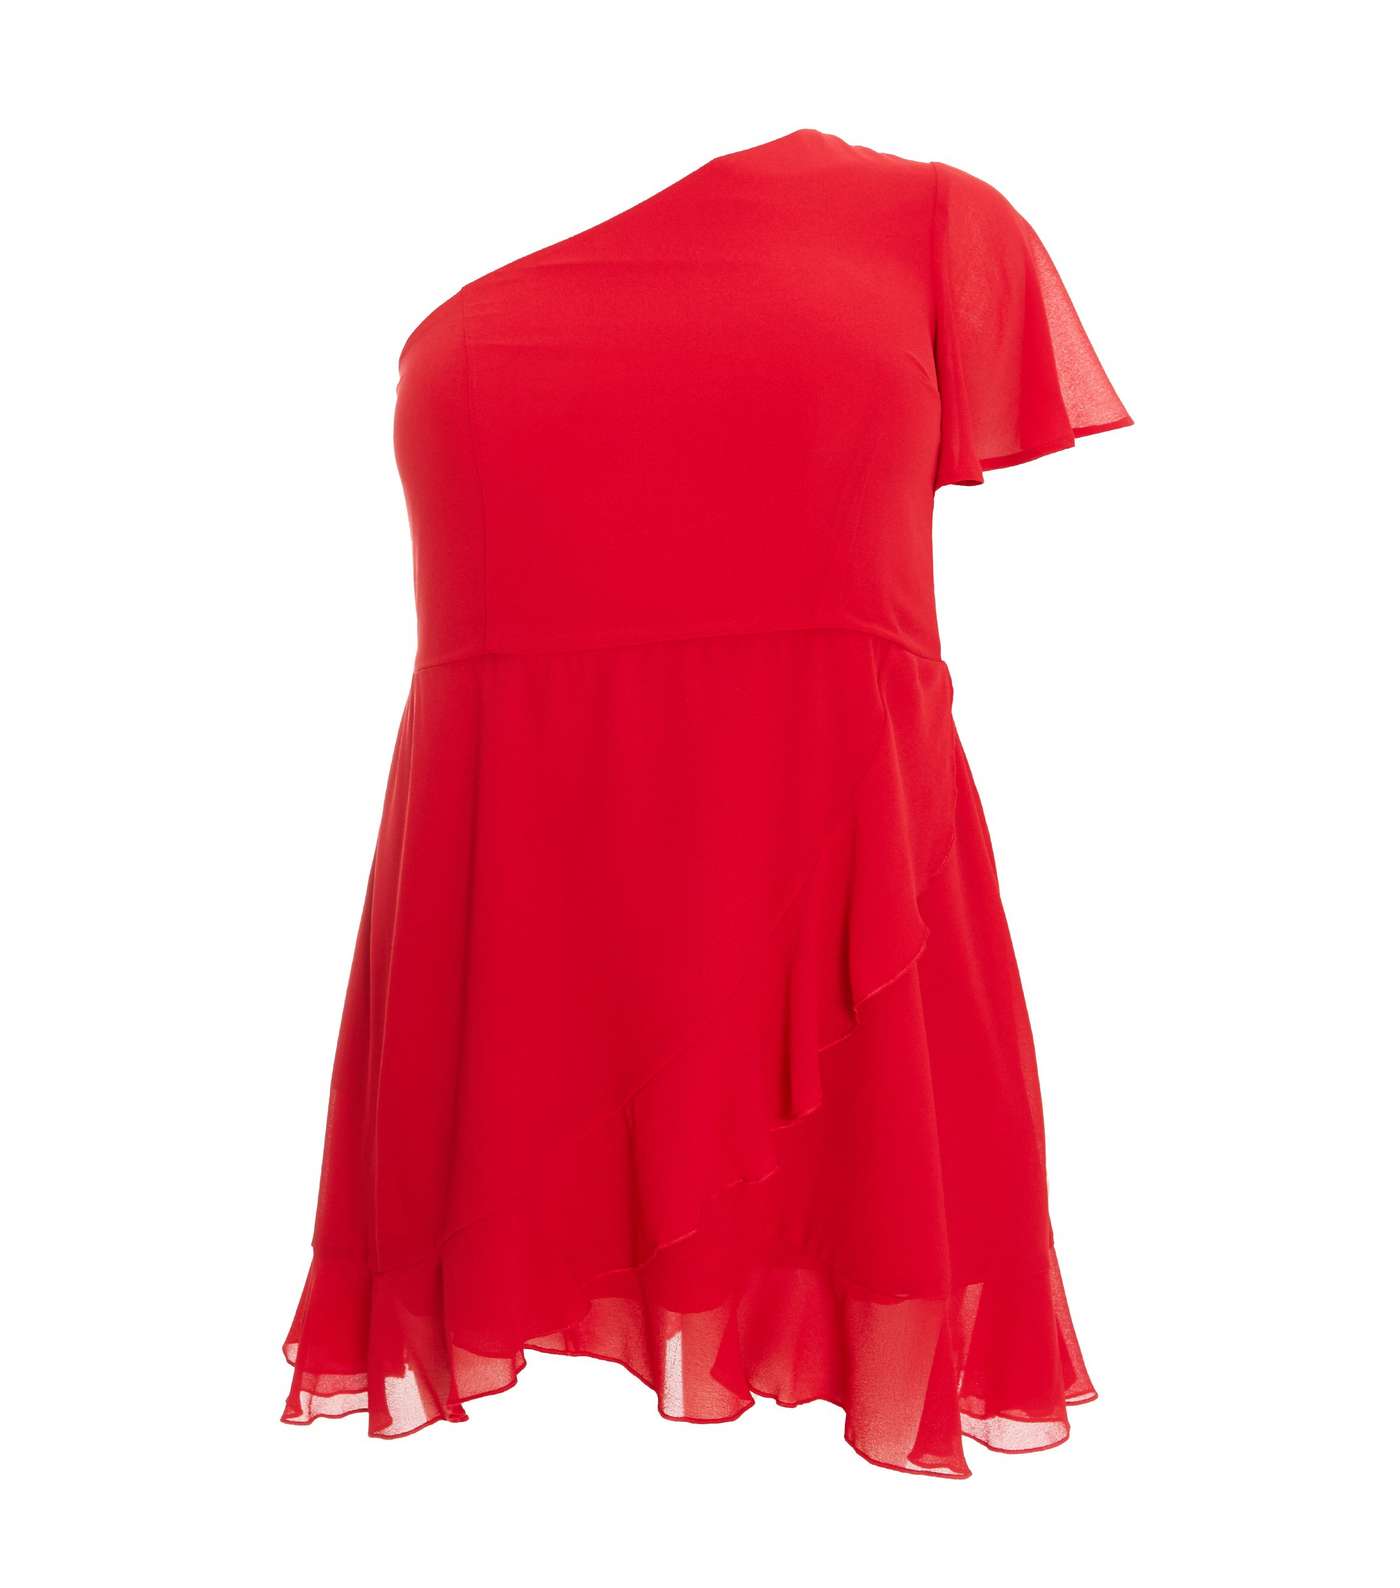 QUIZ Curves Dark Red Chiffon One Shoulder Mini Dress Image 4